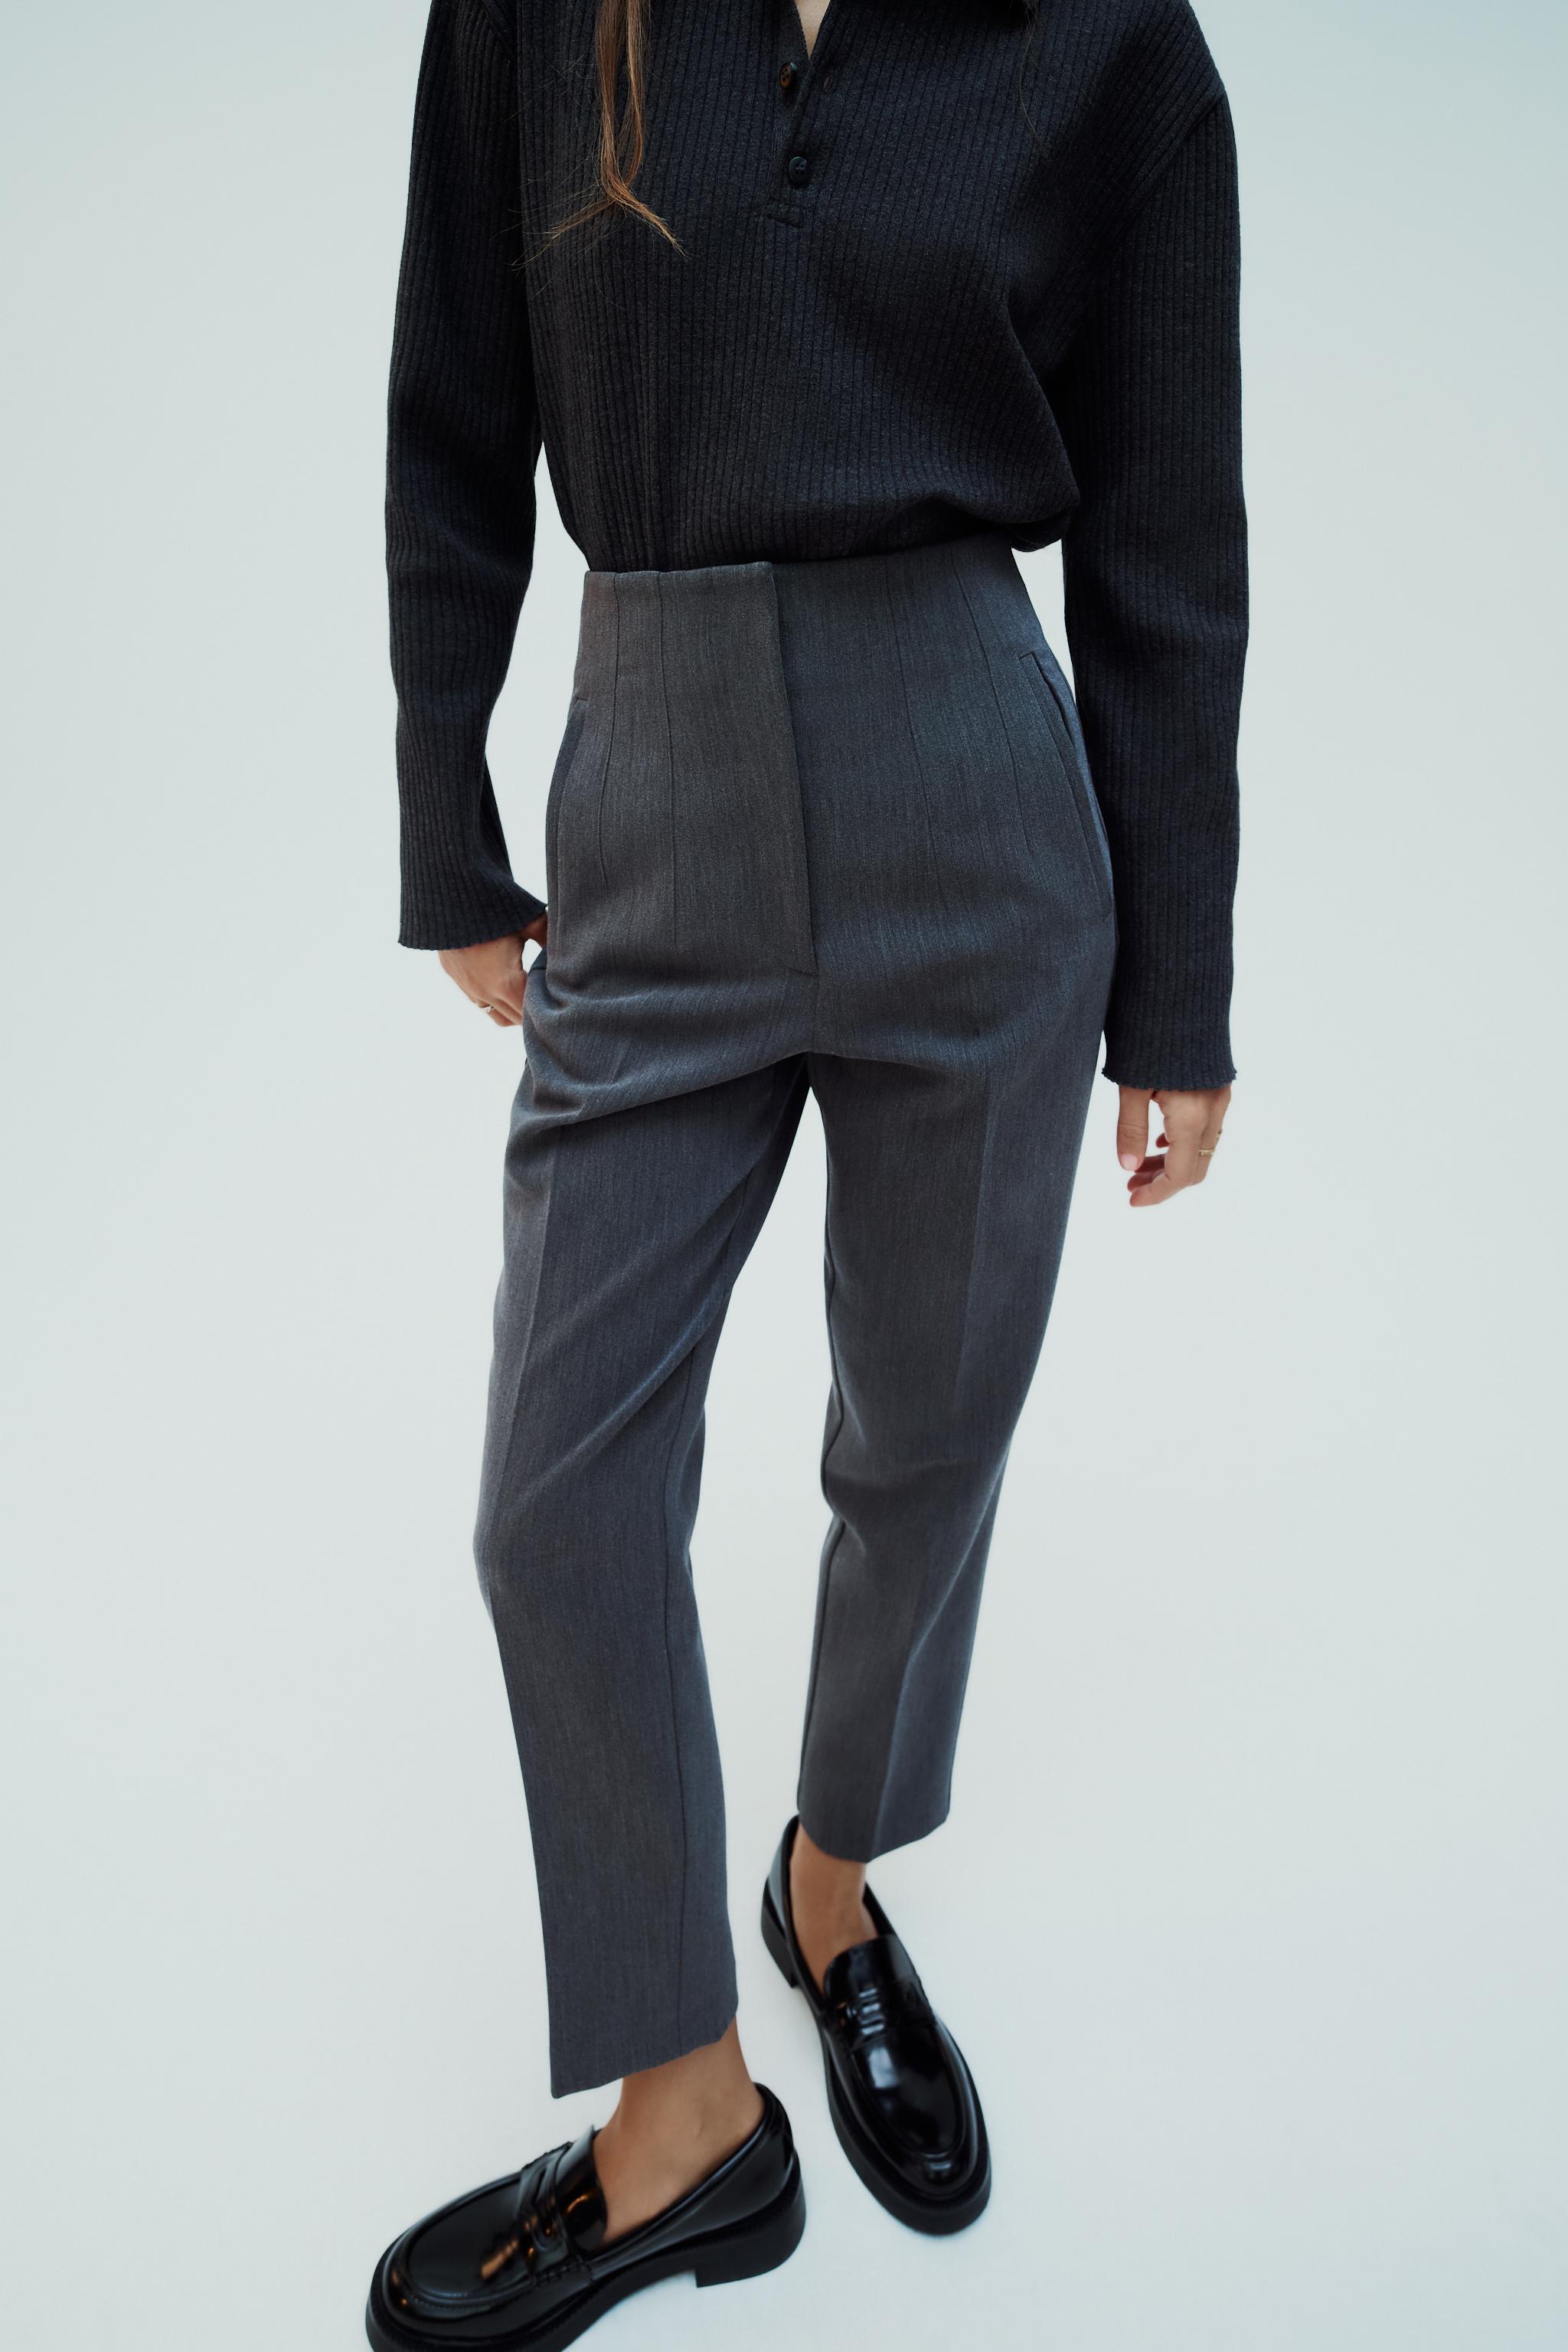 Zara smart light grey trousers with elastic waist!